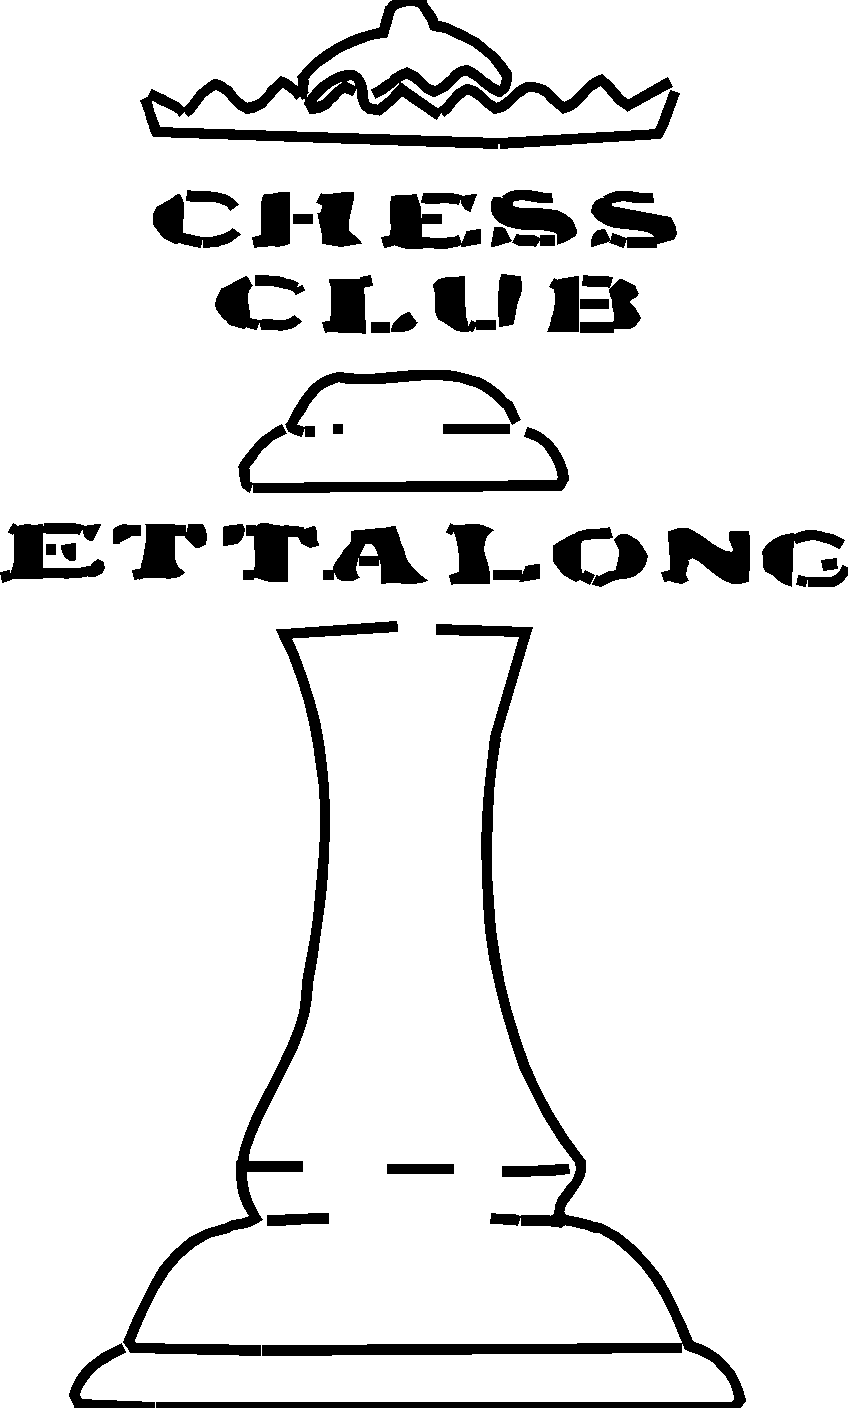 Ettalong Chess Club